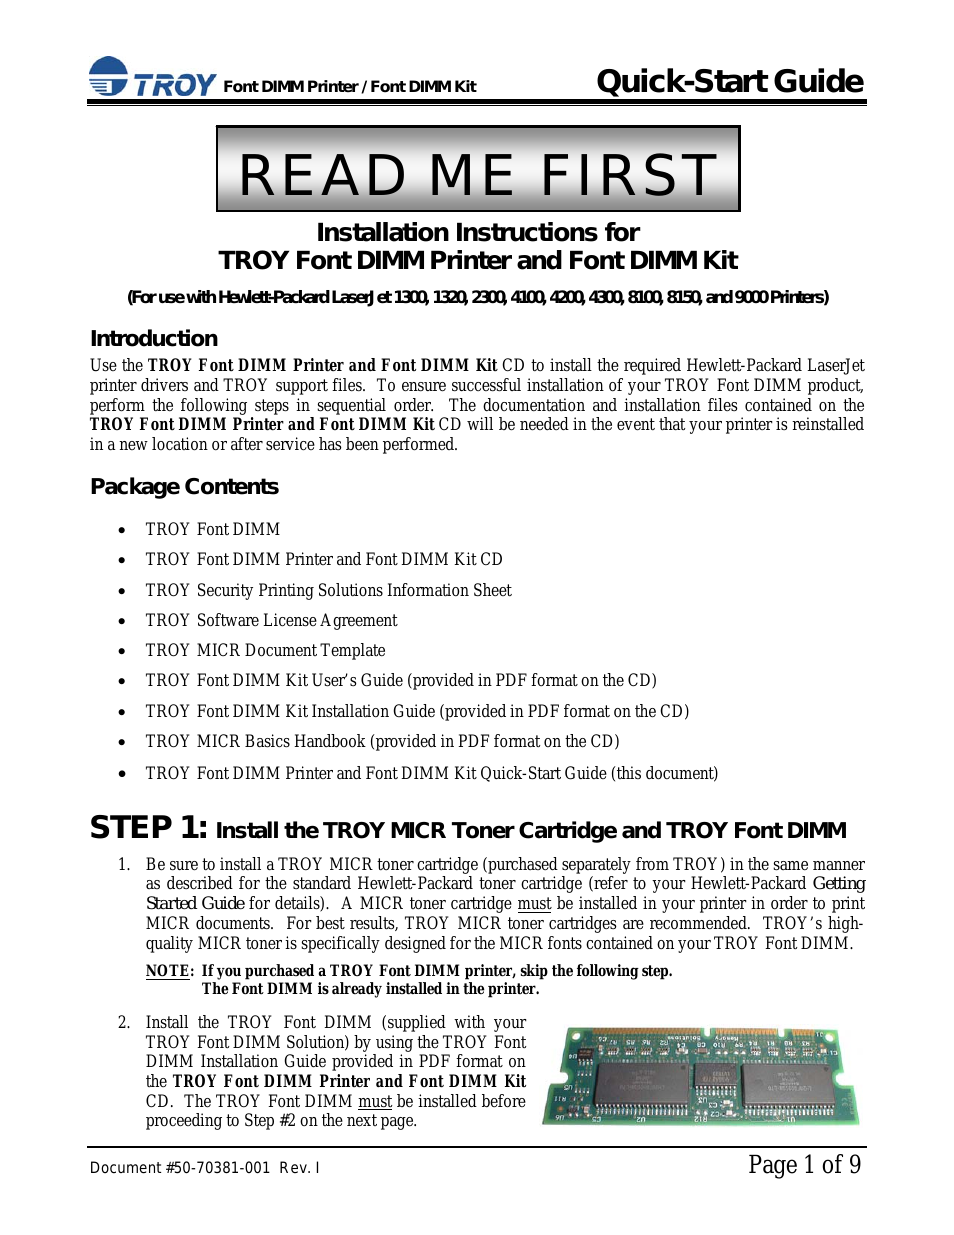 Hewlett-Packard LaserJet 9000 Font DIMM Kit Quick-Start Guide